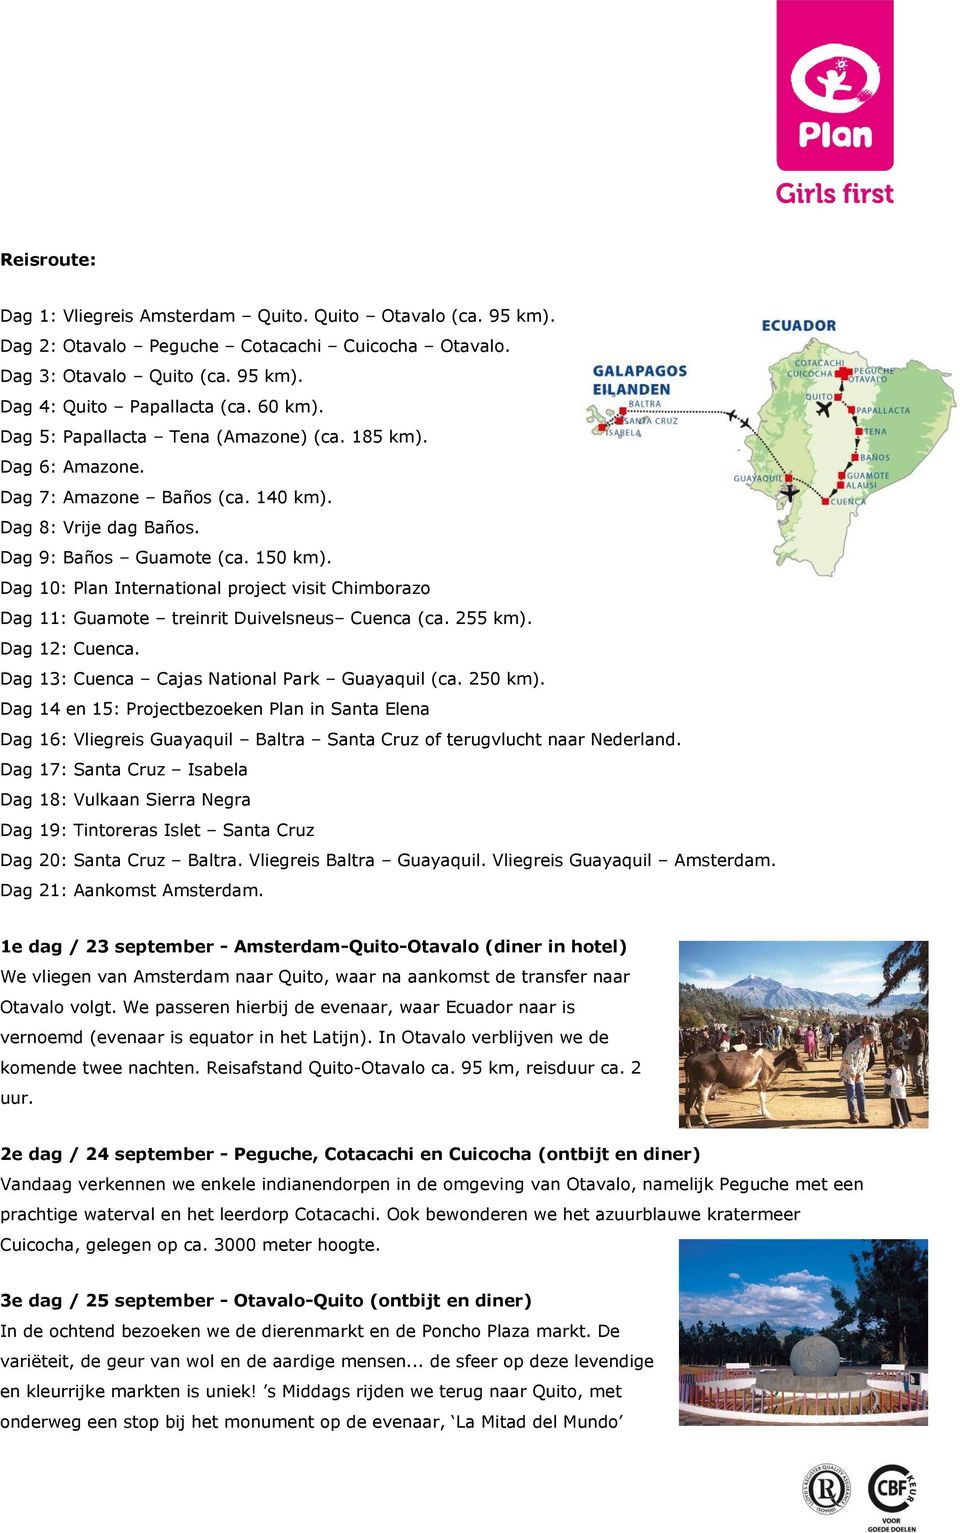 Dag 10: Plan International project visit Chimborazo Dag 11: Guamote treinrit Duivelsneus Cuenca (ca. 255 km). Dag 12: Cuenca. Dag 13: Cuenca Cajas National Park Guayaquil (ca. 250 km).